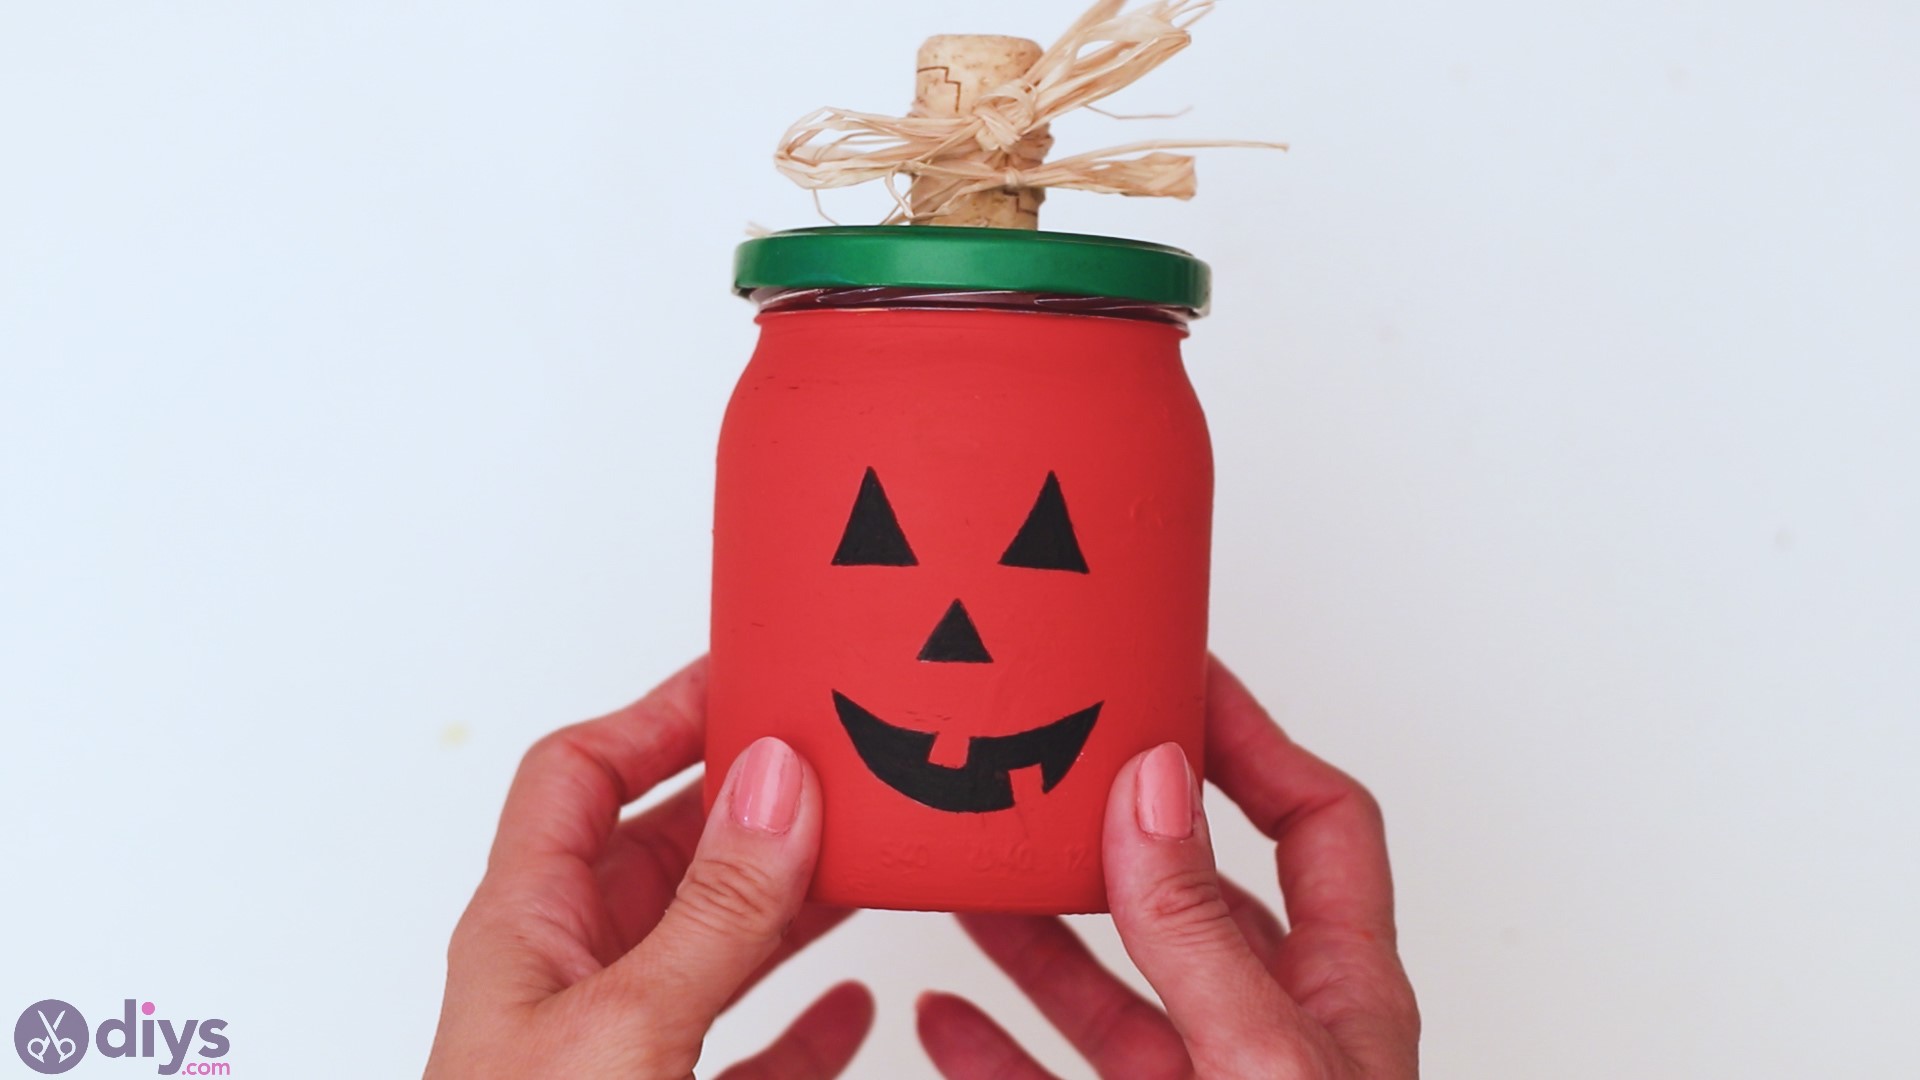 Halloween Mason Jar 